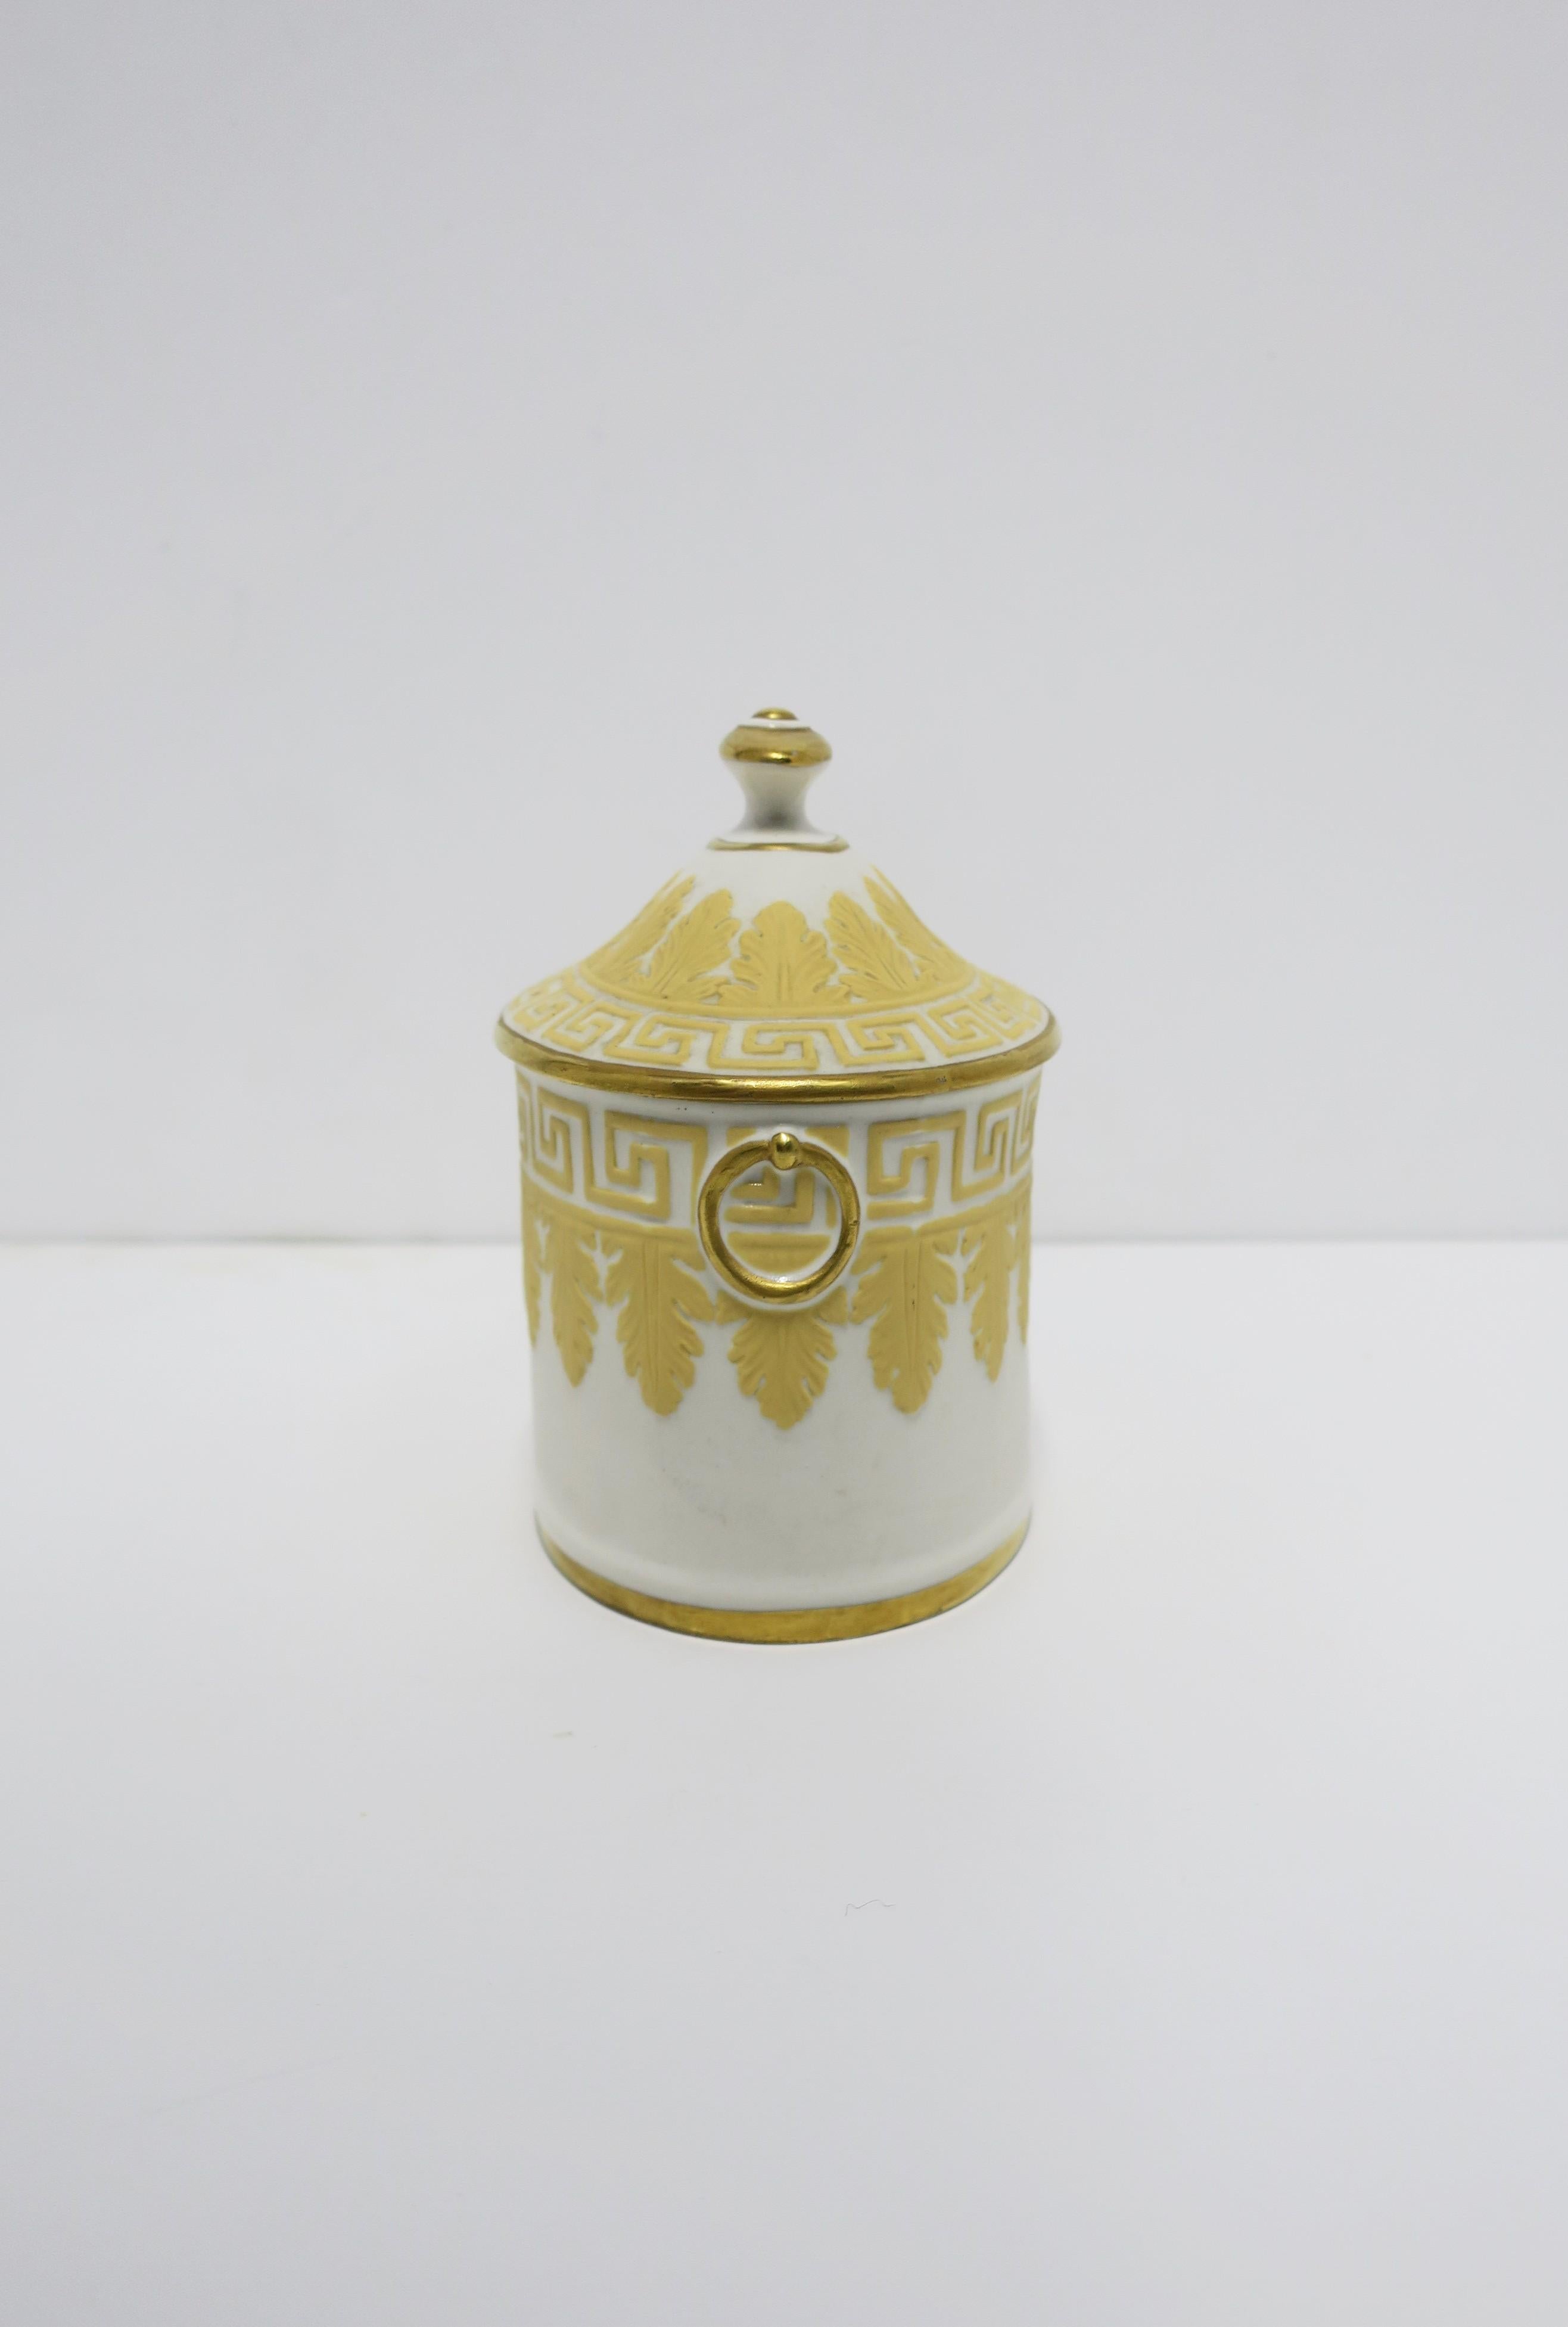 Jasperware Box with Greek-Key Design, Late 19th Century For Sale 6